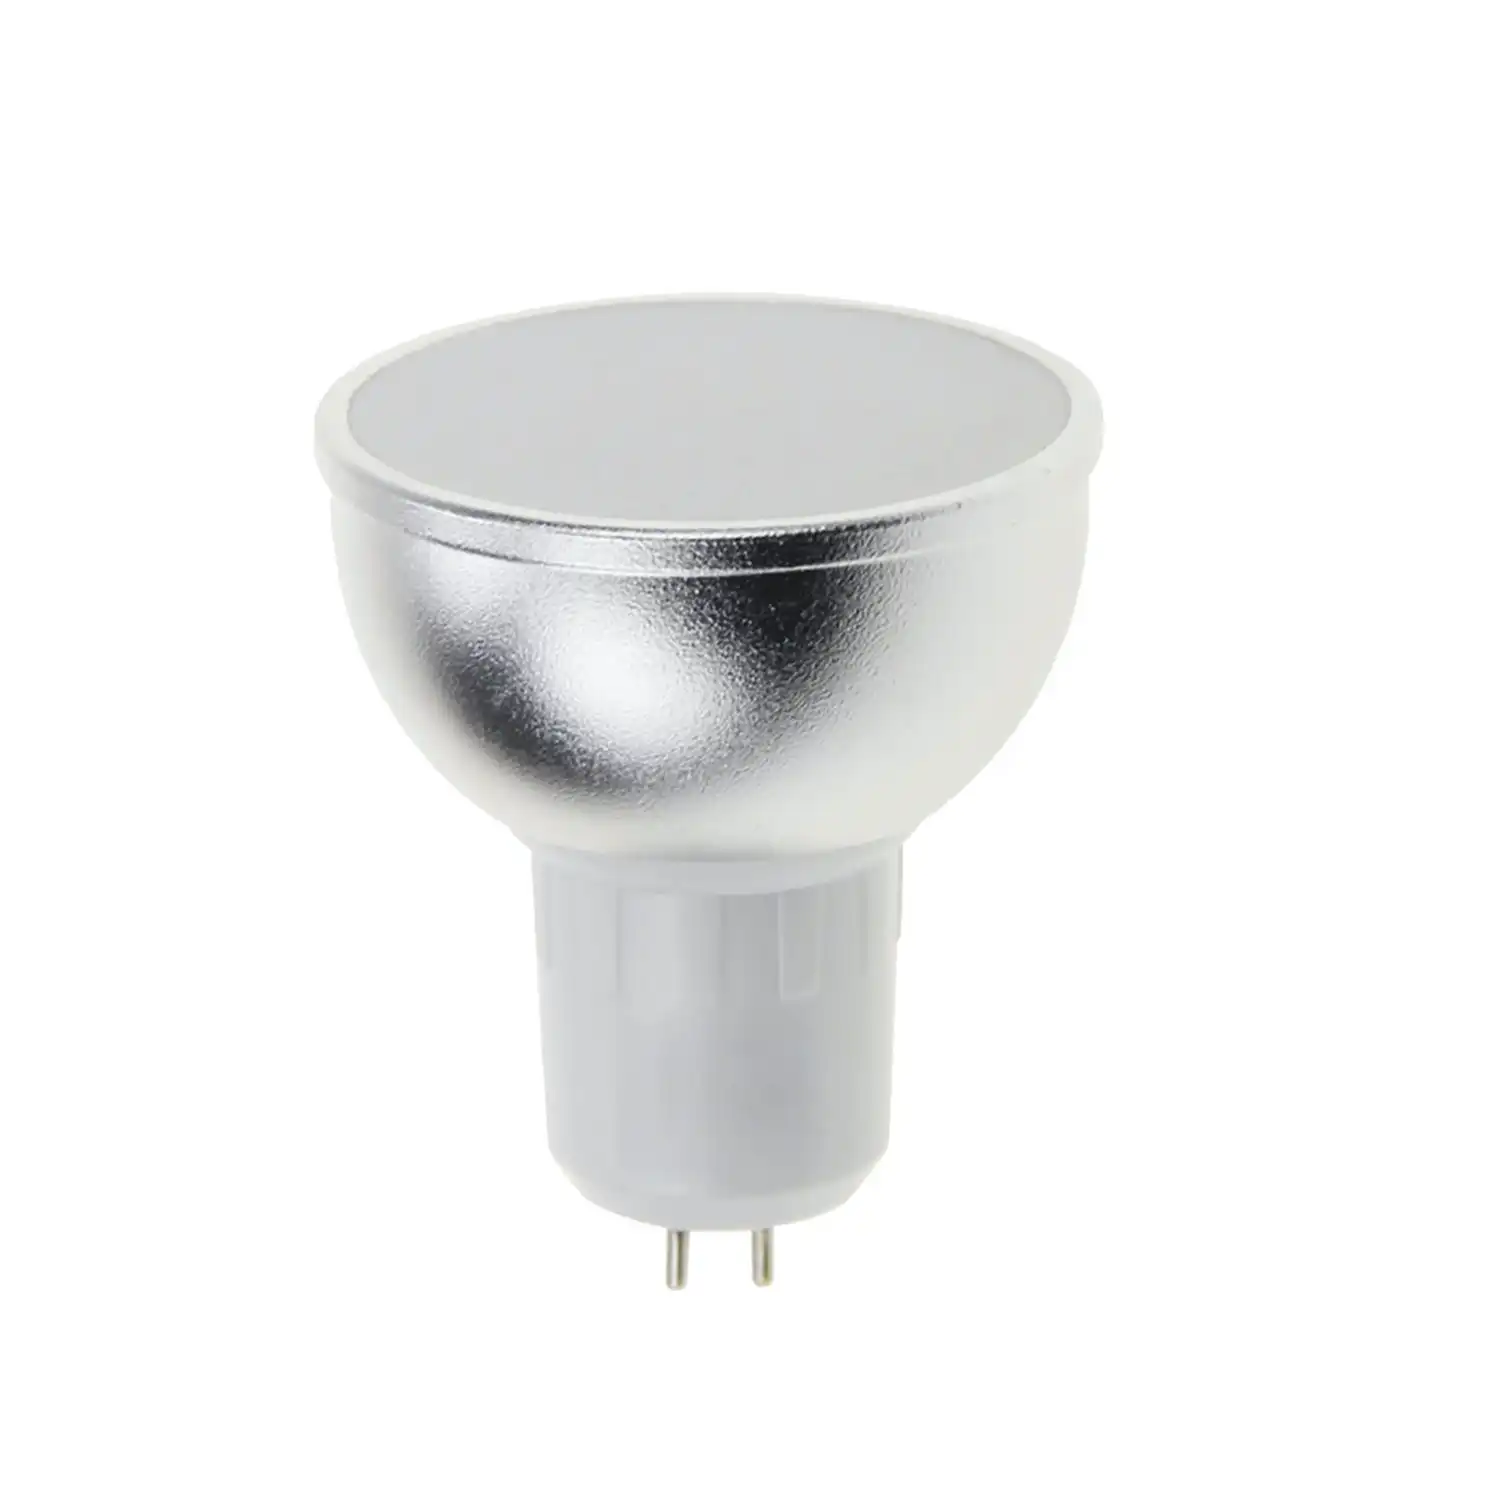 Laser Smart White Downlight (GU5.3) Alexa Google Home Compatible